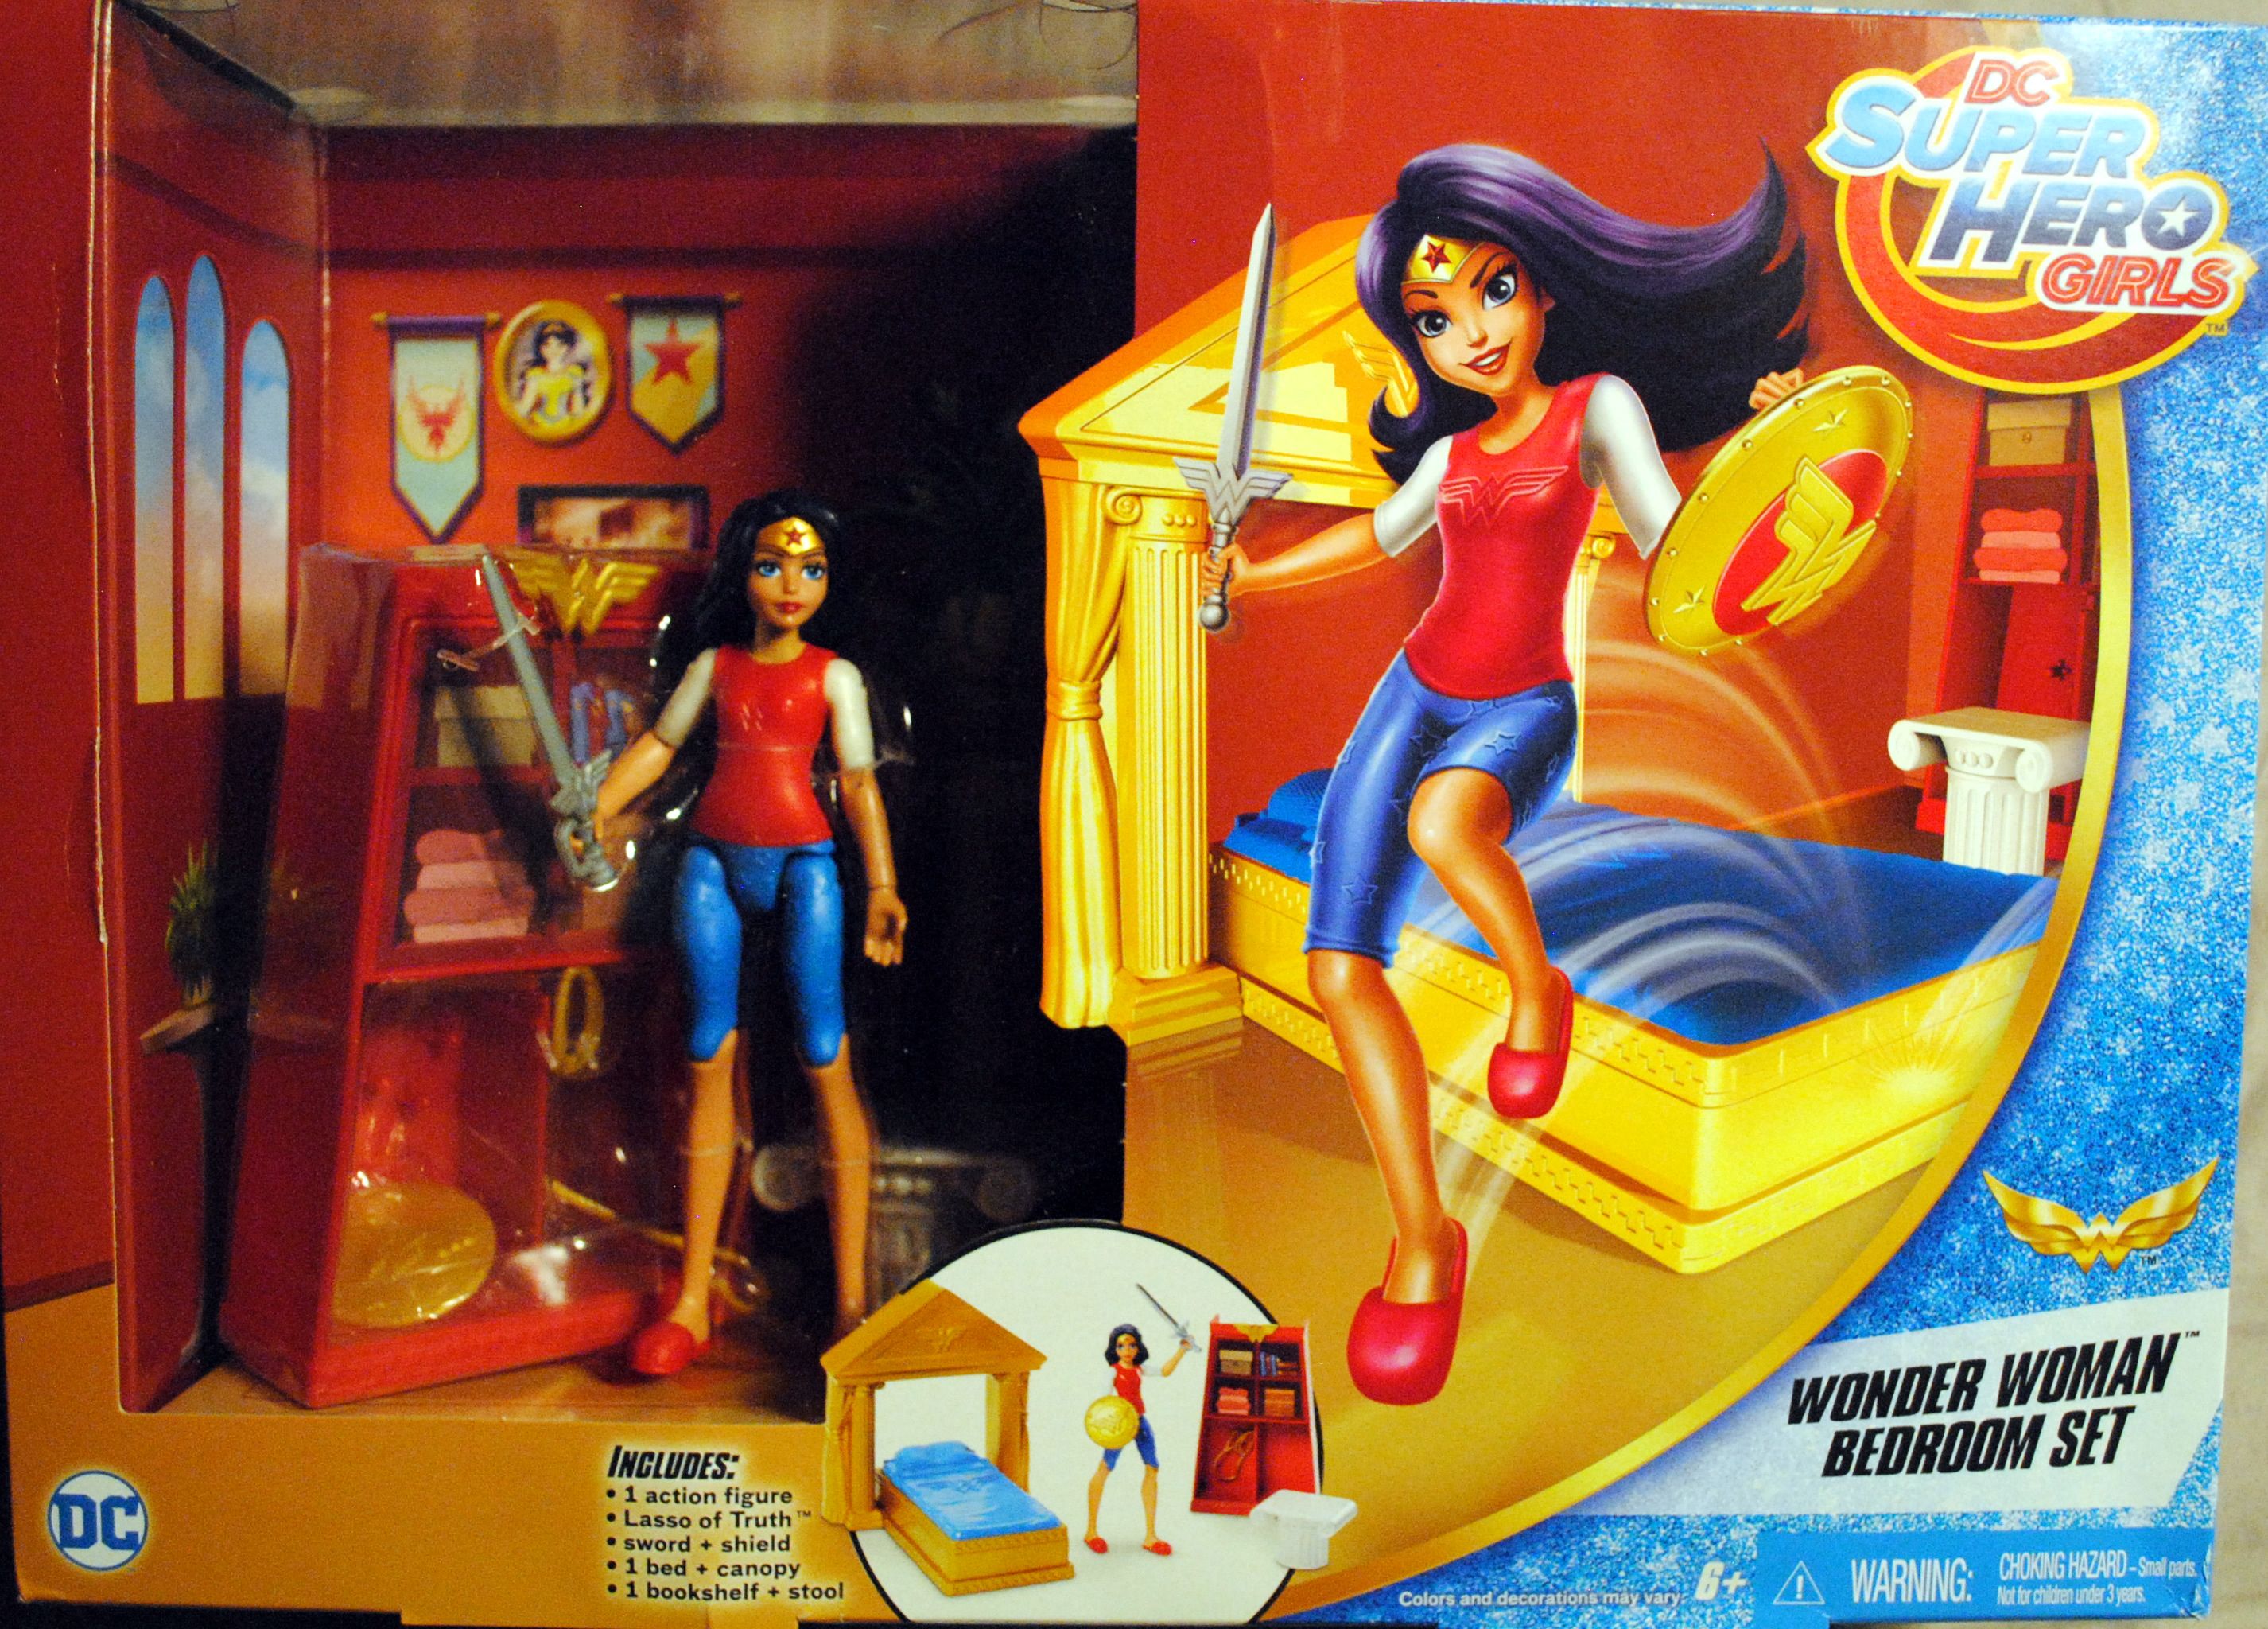 DC Super Hero Girls 6 inch Playset Wonder Woman Bedroom Set - DC Mattel (DC Super Hero Girls) action figure collectible [Barcode 887961447965] - Main Image 1